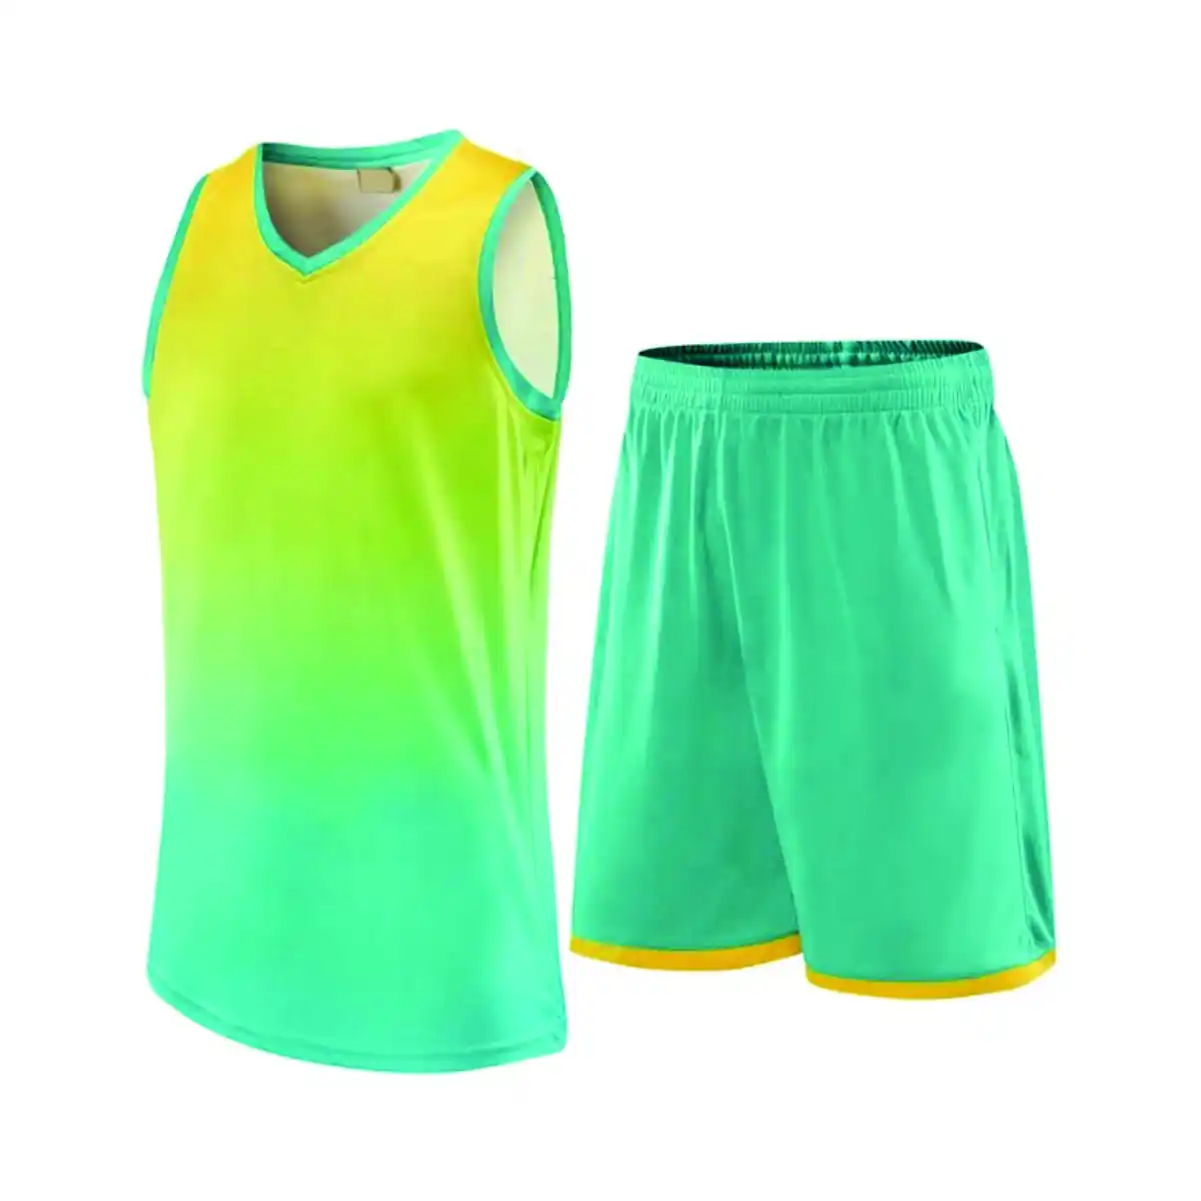 Uniforme de basquete personalizado, uniforme de basquete personalizado com novo design impresso uniforme de basquete bola esportes